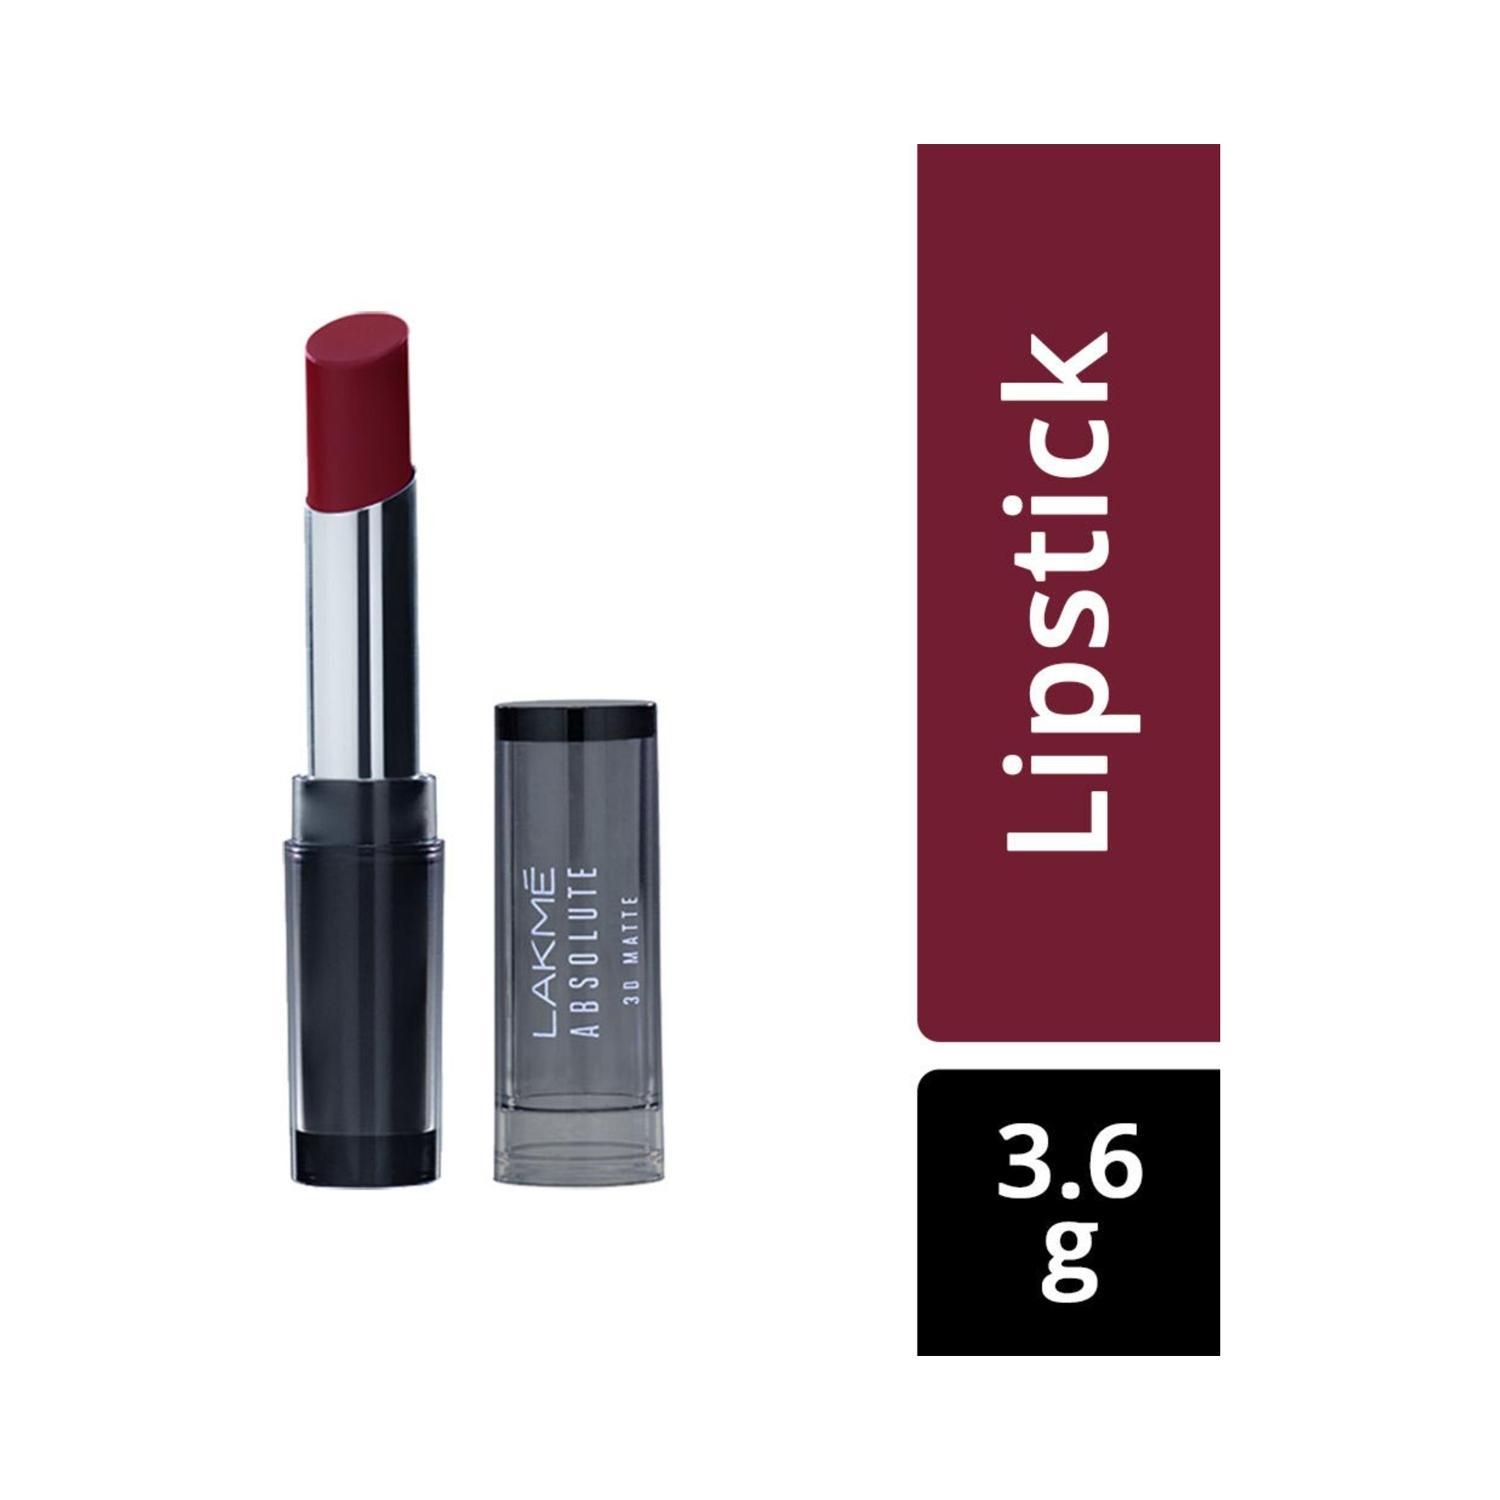 lakme absolute 3d lipstick - wine whisper (3.6g)